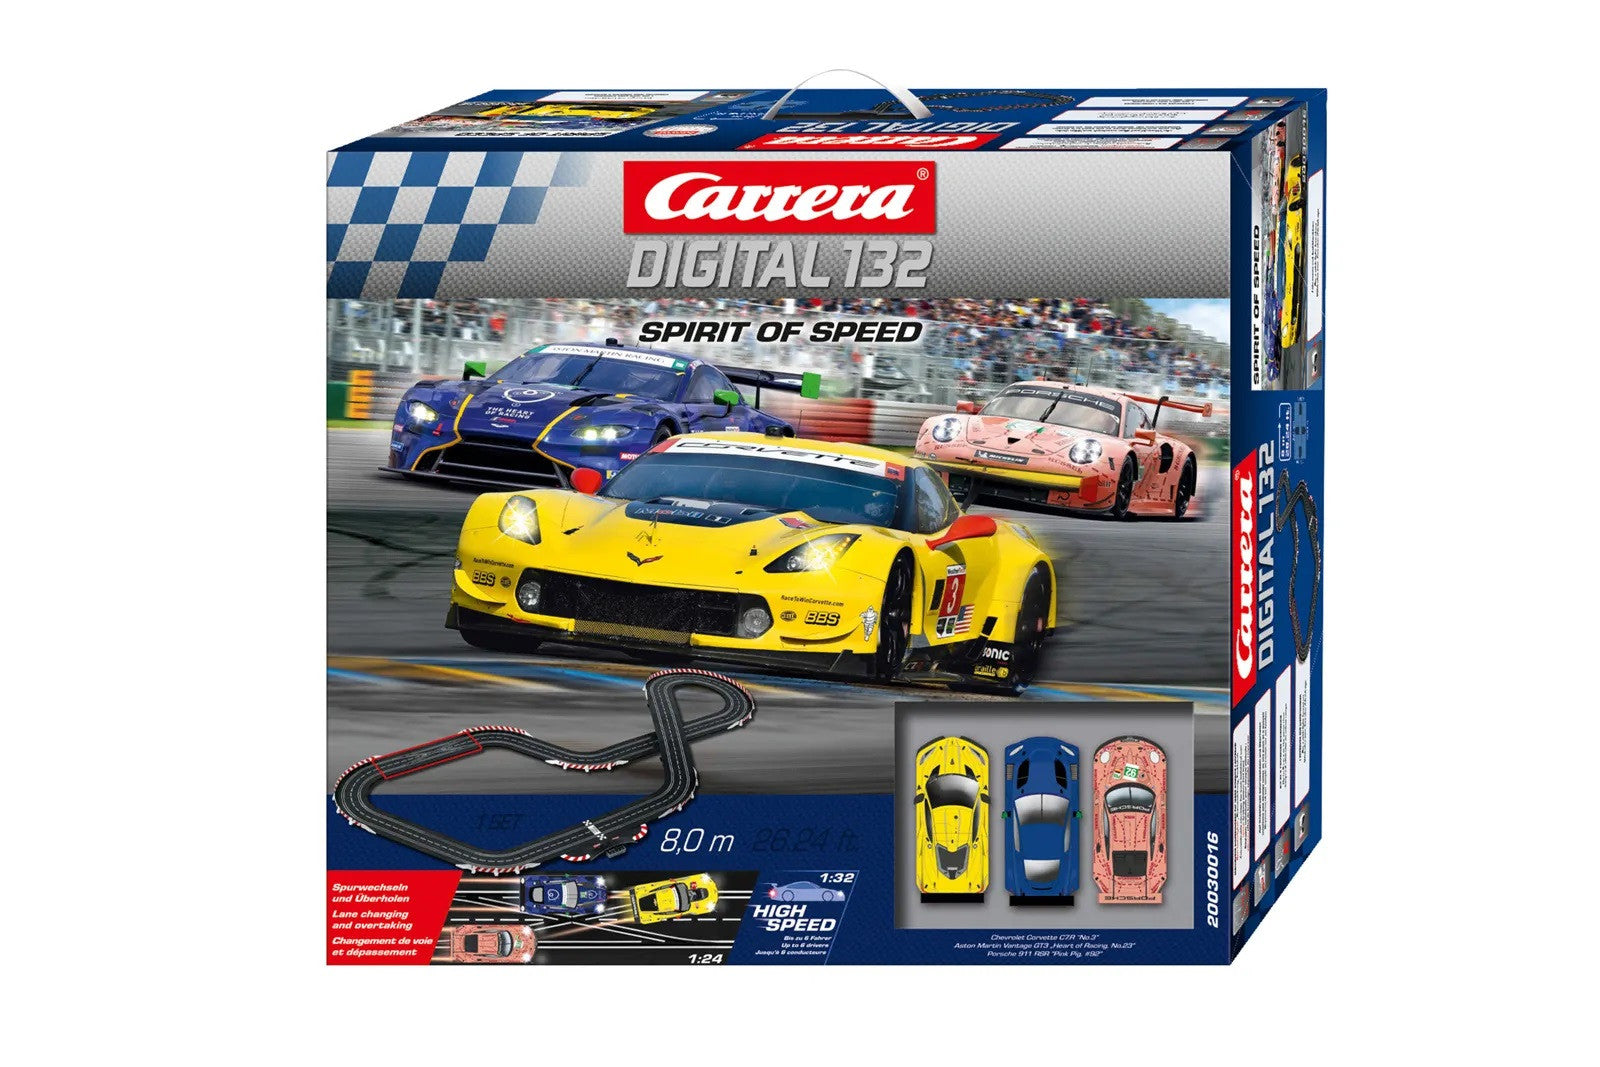 CARRERA DIGITAL 132 SET 30023 - Race to Victory - 8.0m / 2 cars